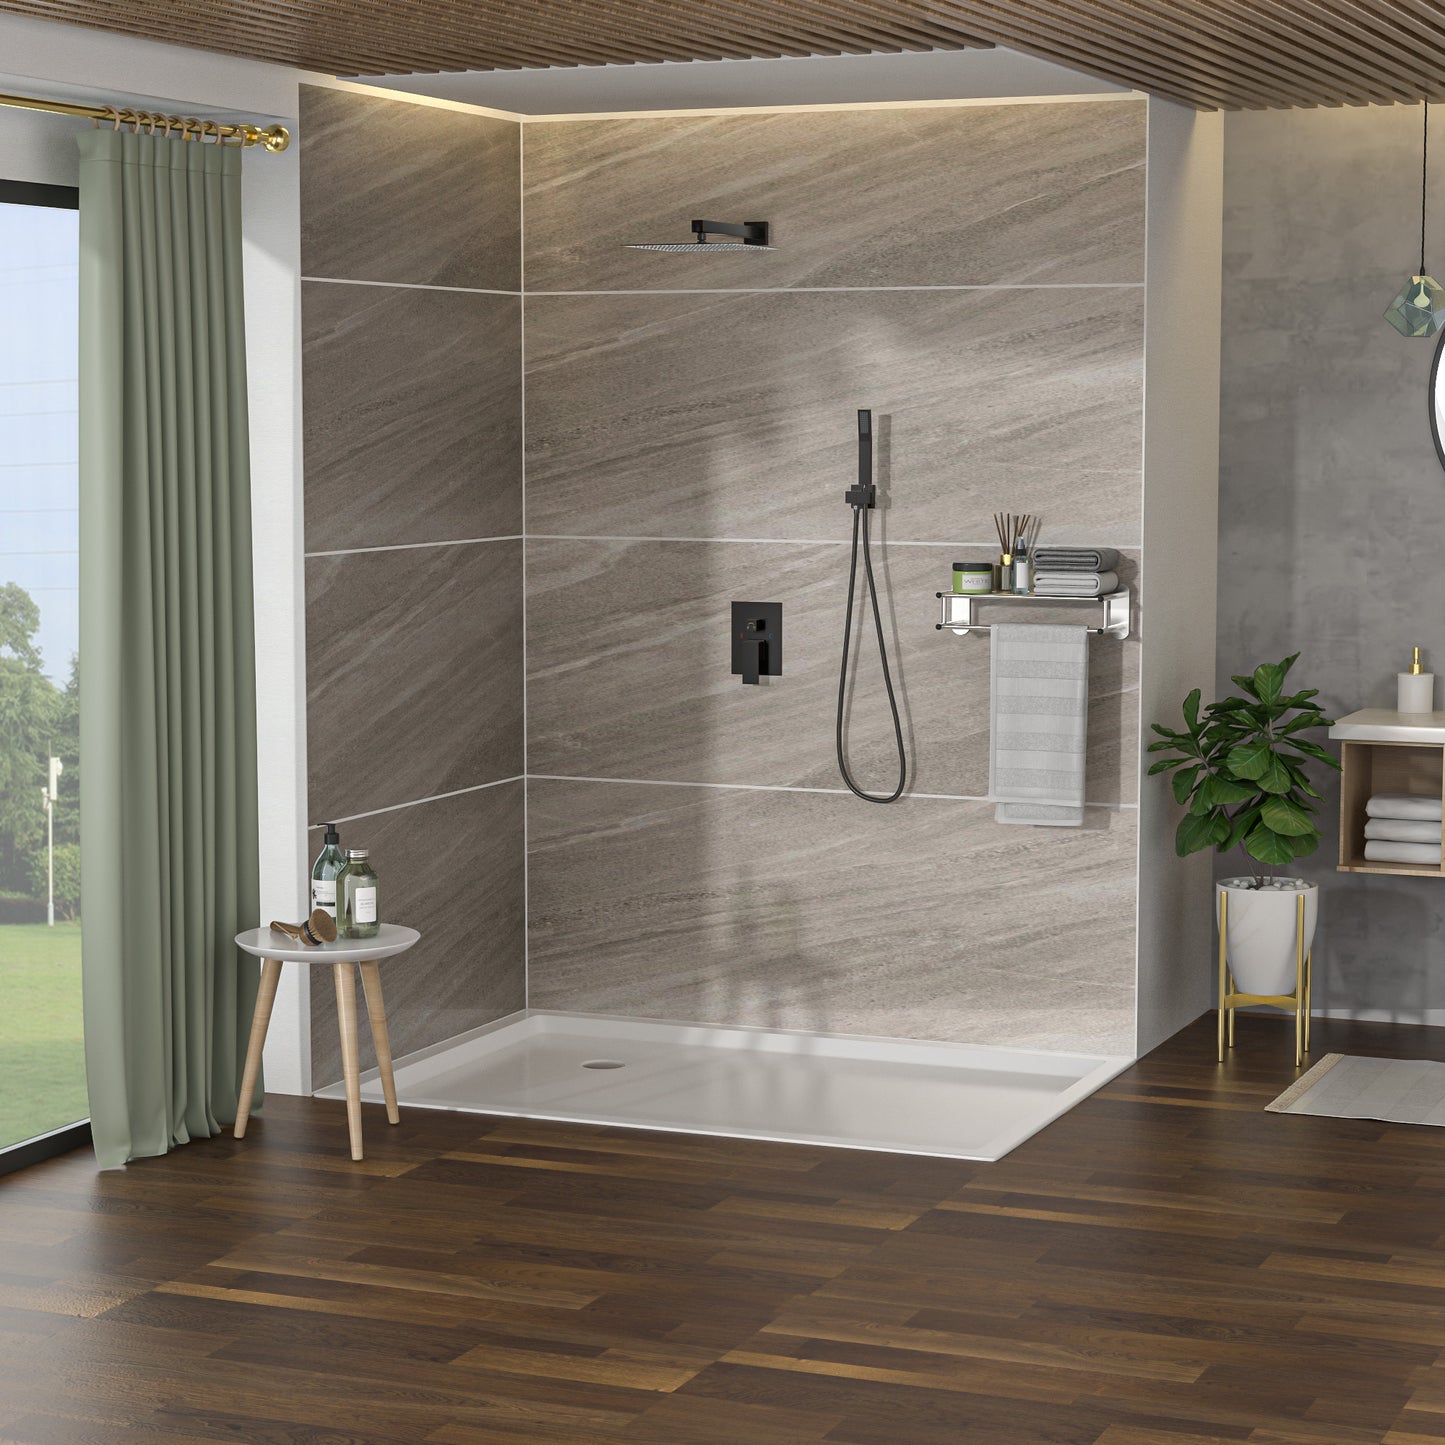 Shower set - 10 inch square shower set, Dual Shower Heads, simple classic shape, Oil Rubber Bronze